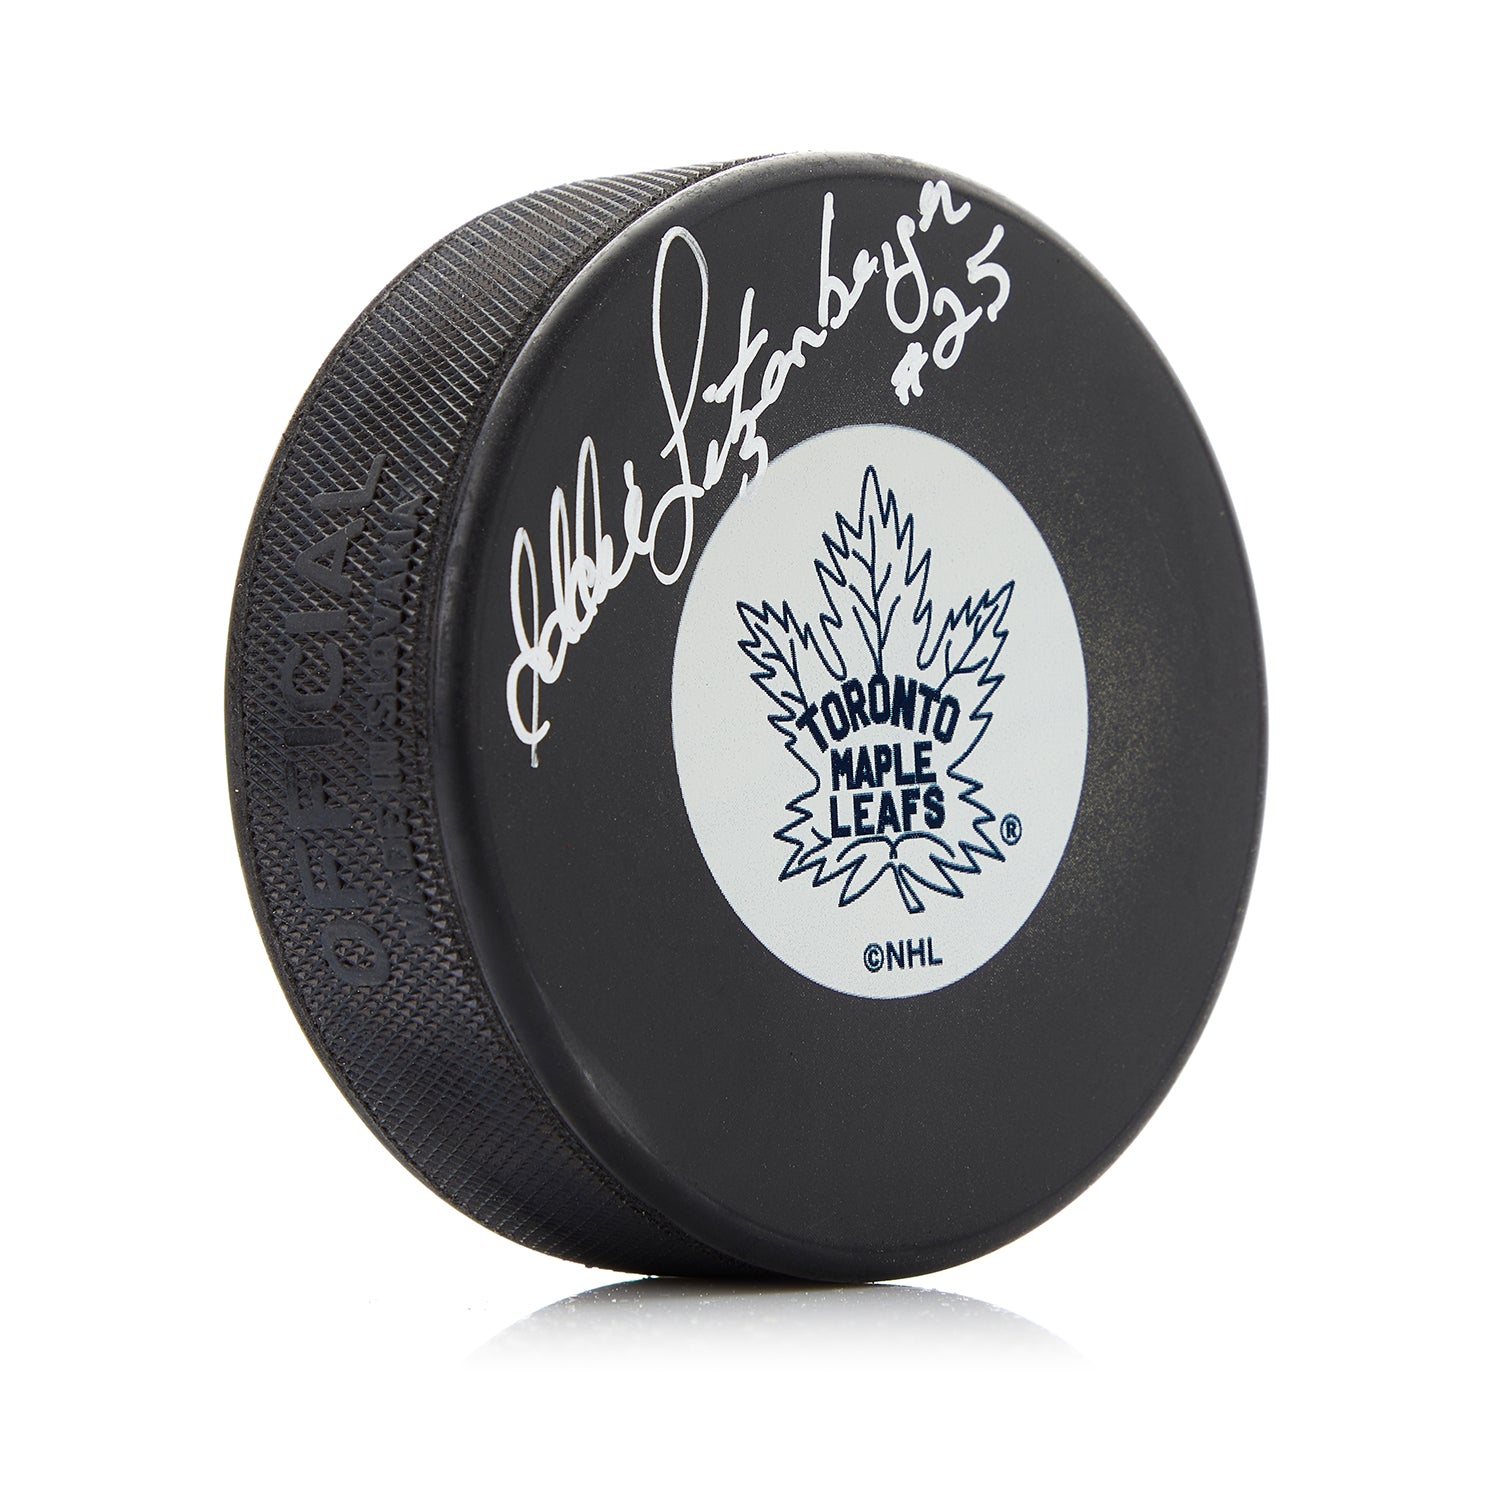 Eddie Litzenberger Autographed Toronto Maple Leafs Hockey Puck